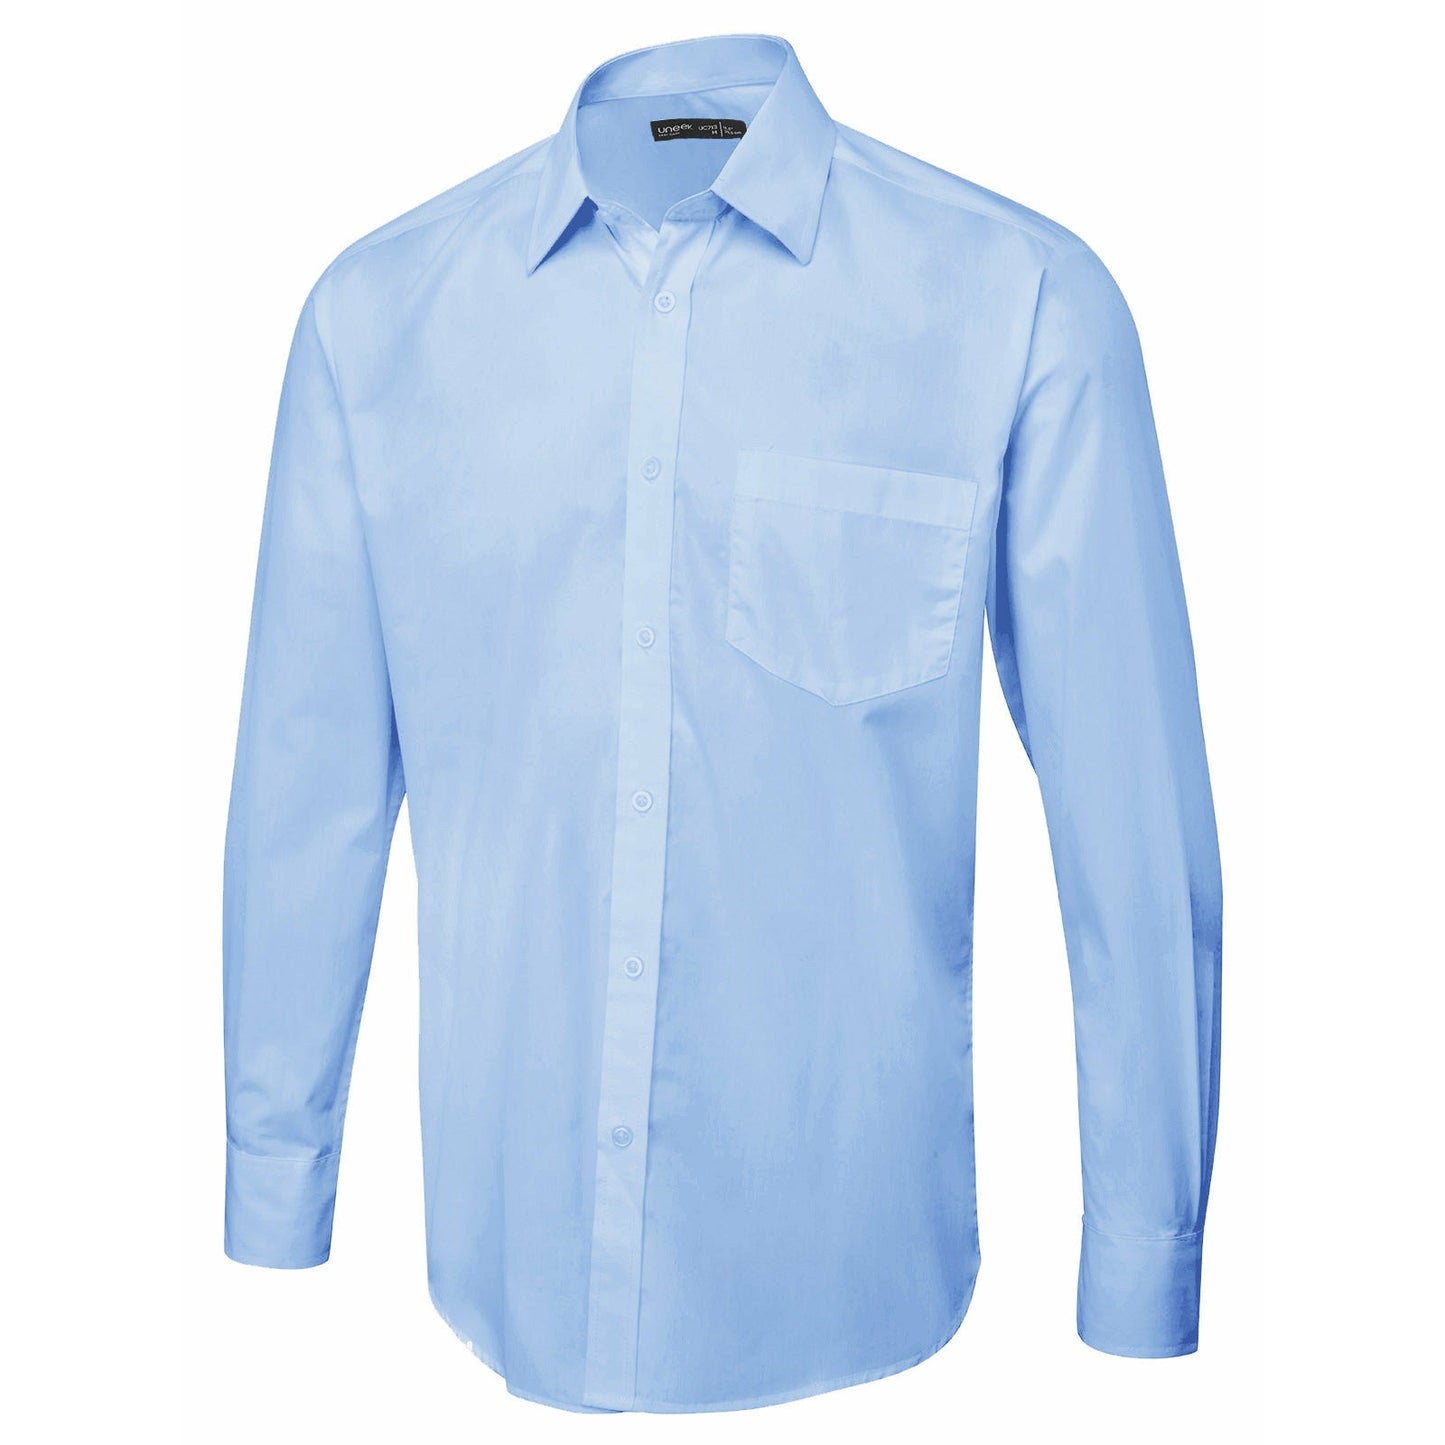 Men's Long Sleeve Poplin Shirt - Light Blue